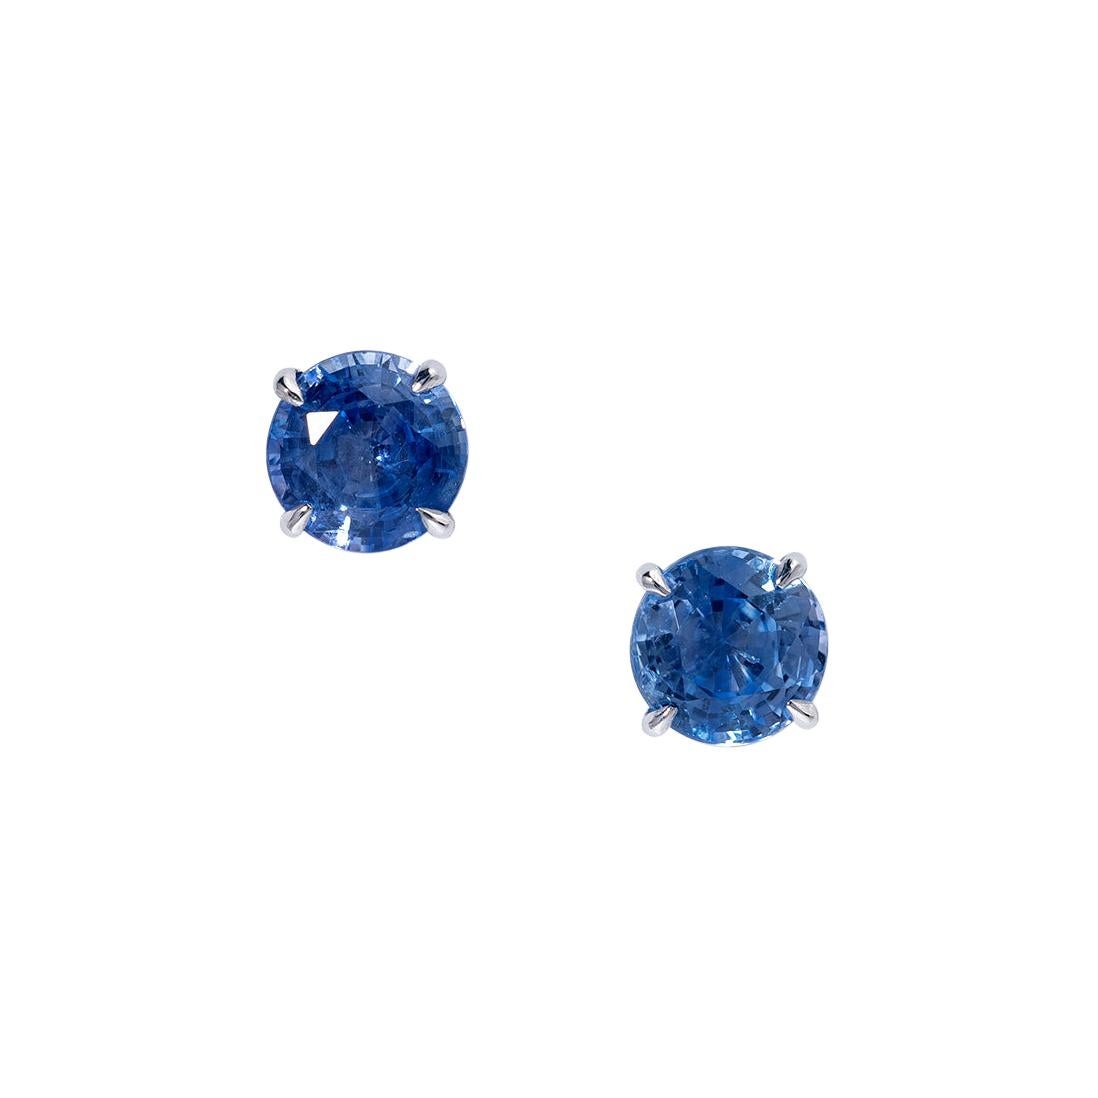 Round Blue Sapphire Stud Earrings in 18 Karat White Gold